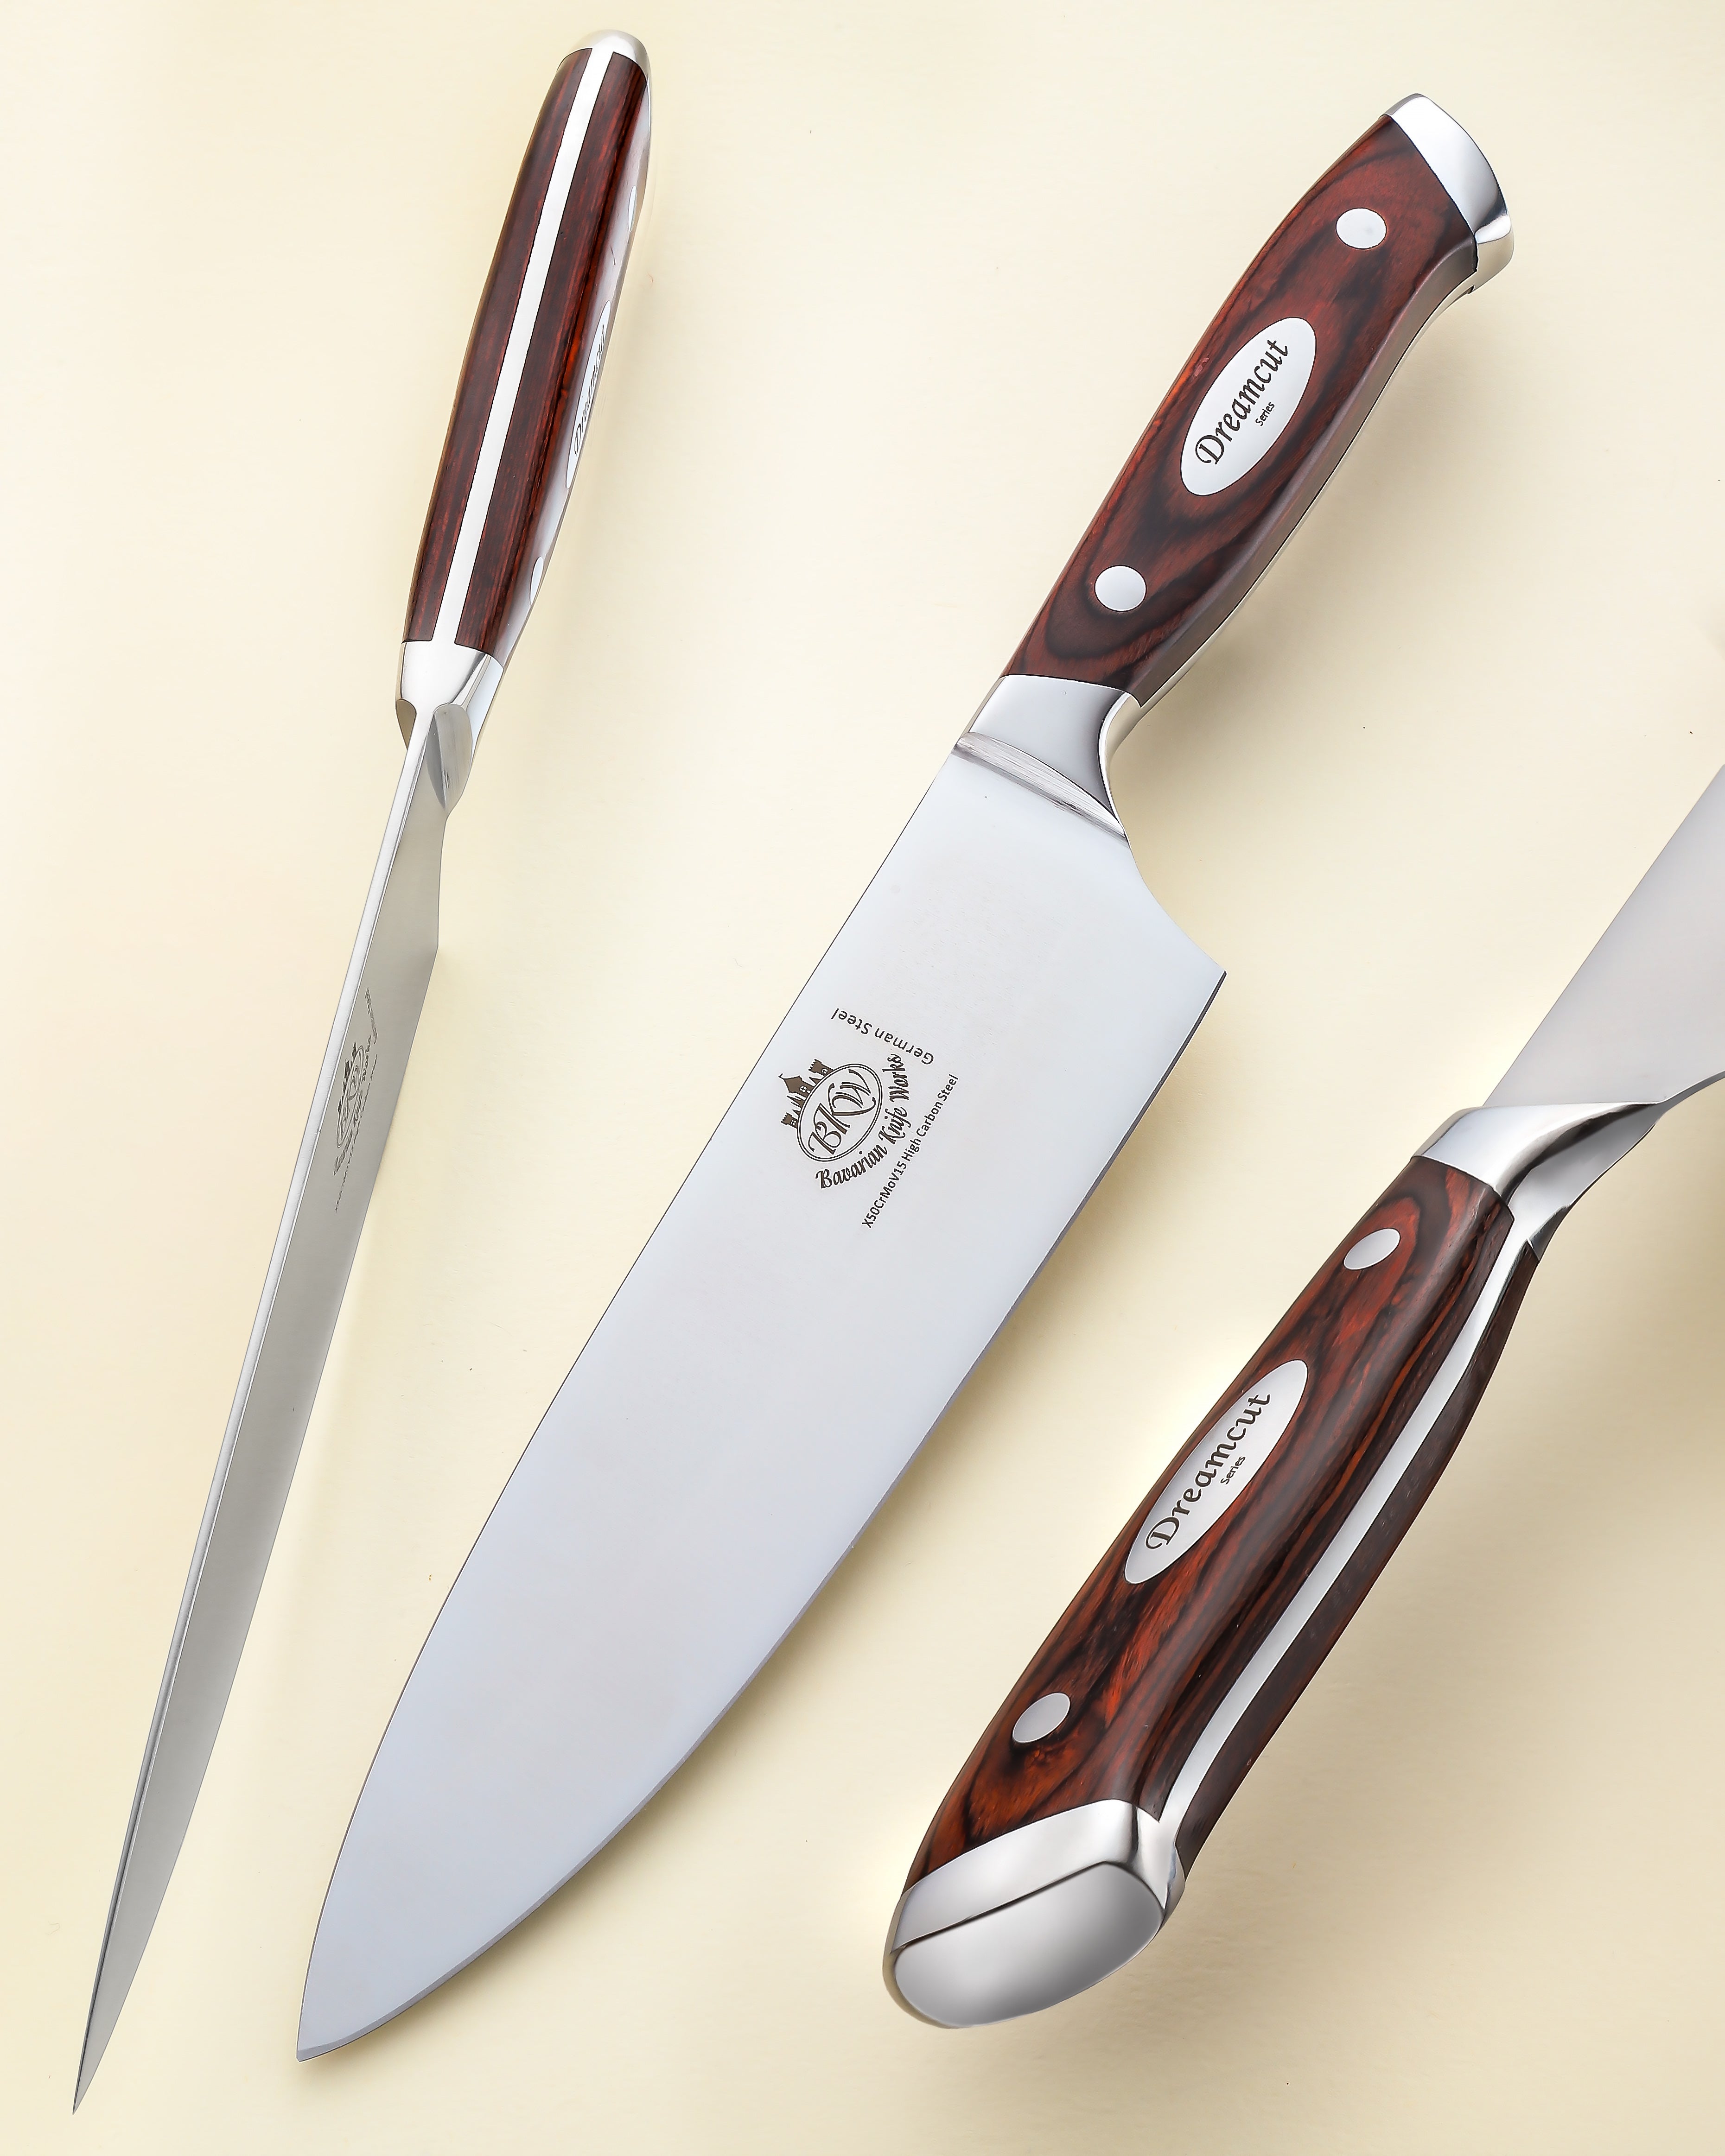 Bavarian Knife Works 12 PCS Kitchen Knife Set, Razor Sharp Blades, Made of  German Steel, Ergonomic Pakkawood Handle, Light Weight Easy to Sharpen, No